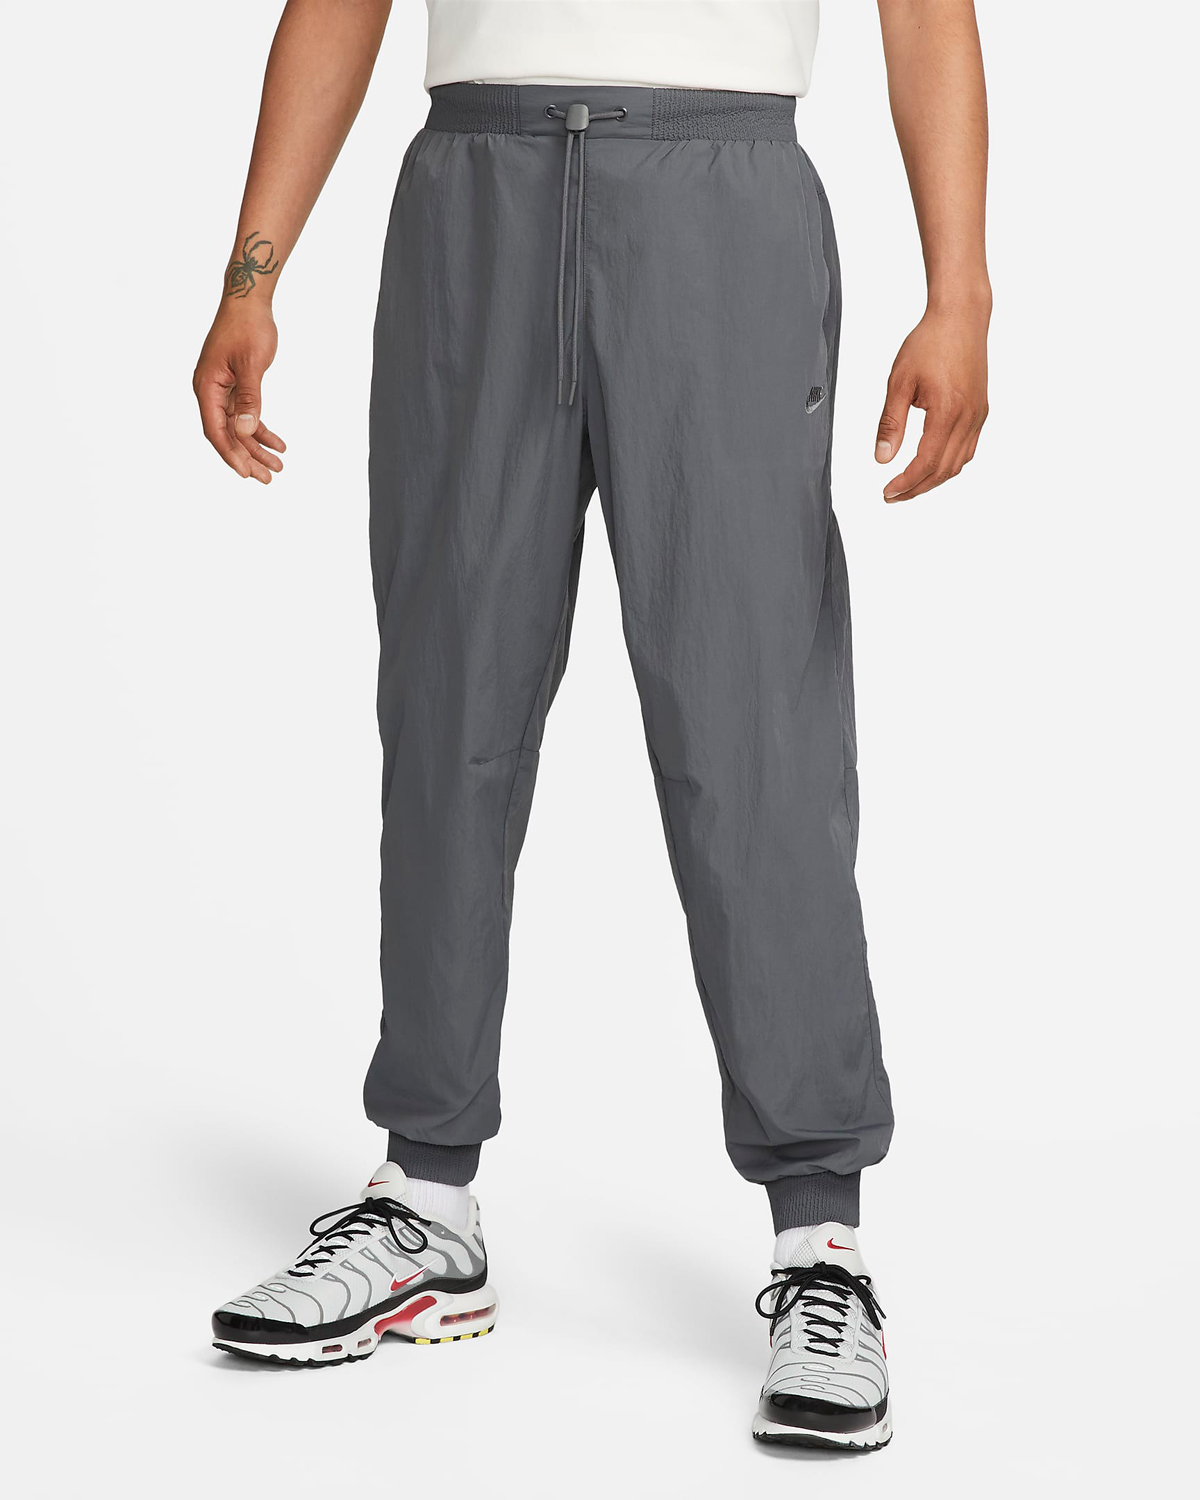 Nike-Sportswear-Tech-Pack-Woven-Pants-Iron-Grey-1